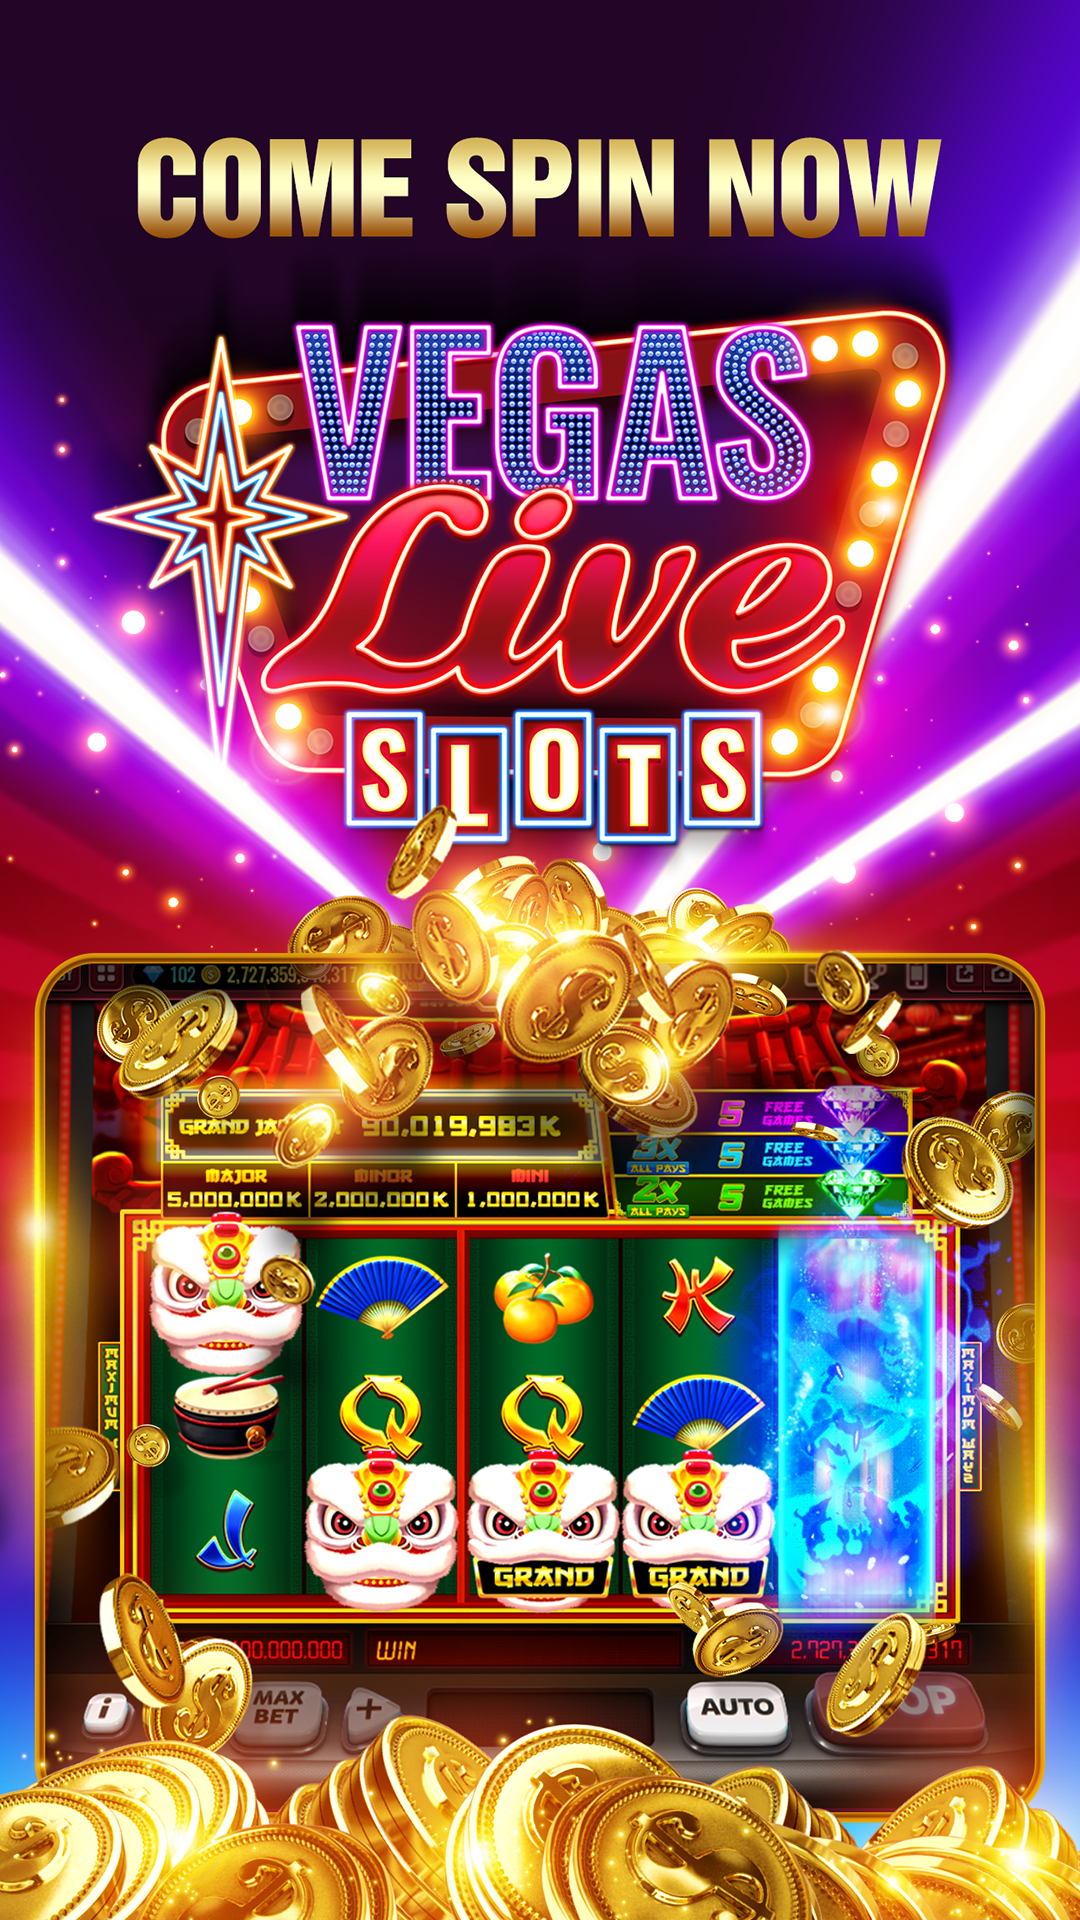 New Vegas Slots